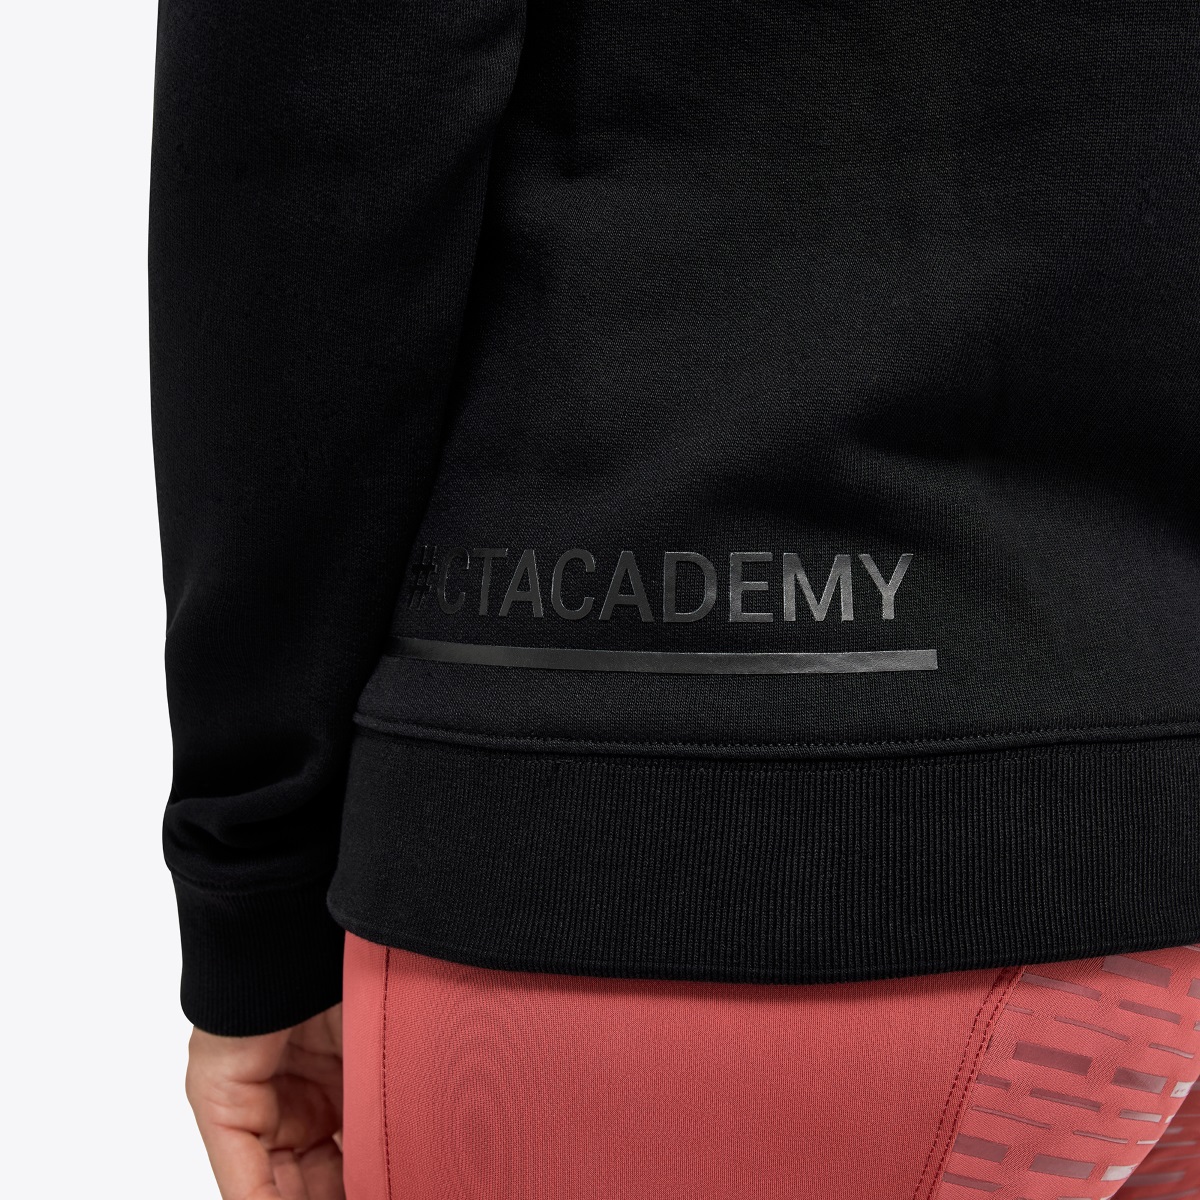 CAVALLERIA TOSCANA Academy Damen Sweatshirt Trainingsshirt - black - XS - 6